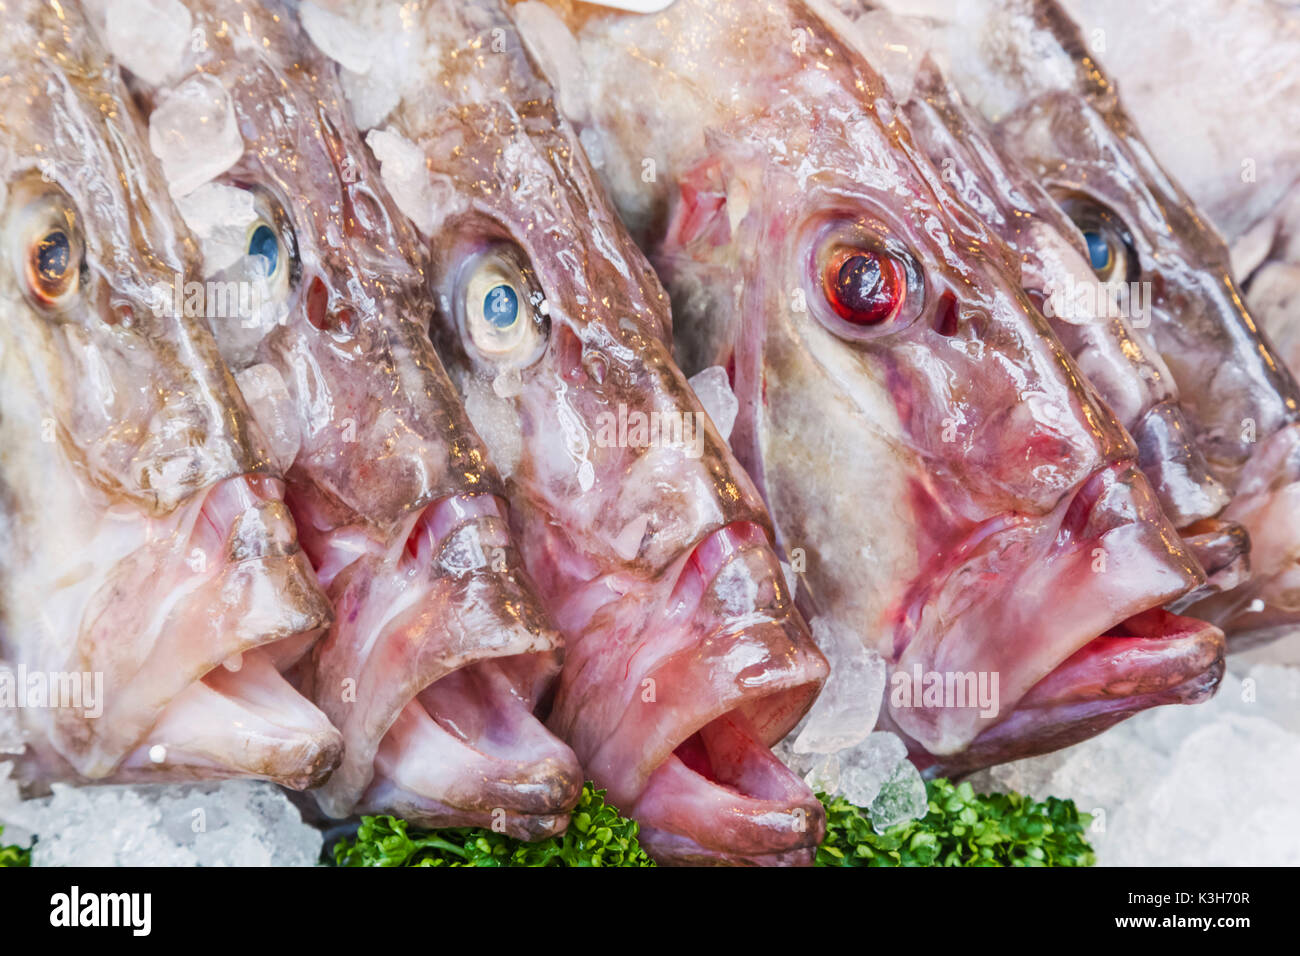 England, London, Southwark, Borough Market, Fish Shop Display of John Dory Fish Stock Photo